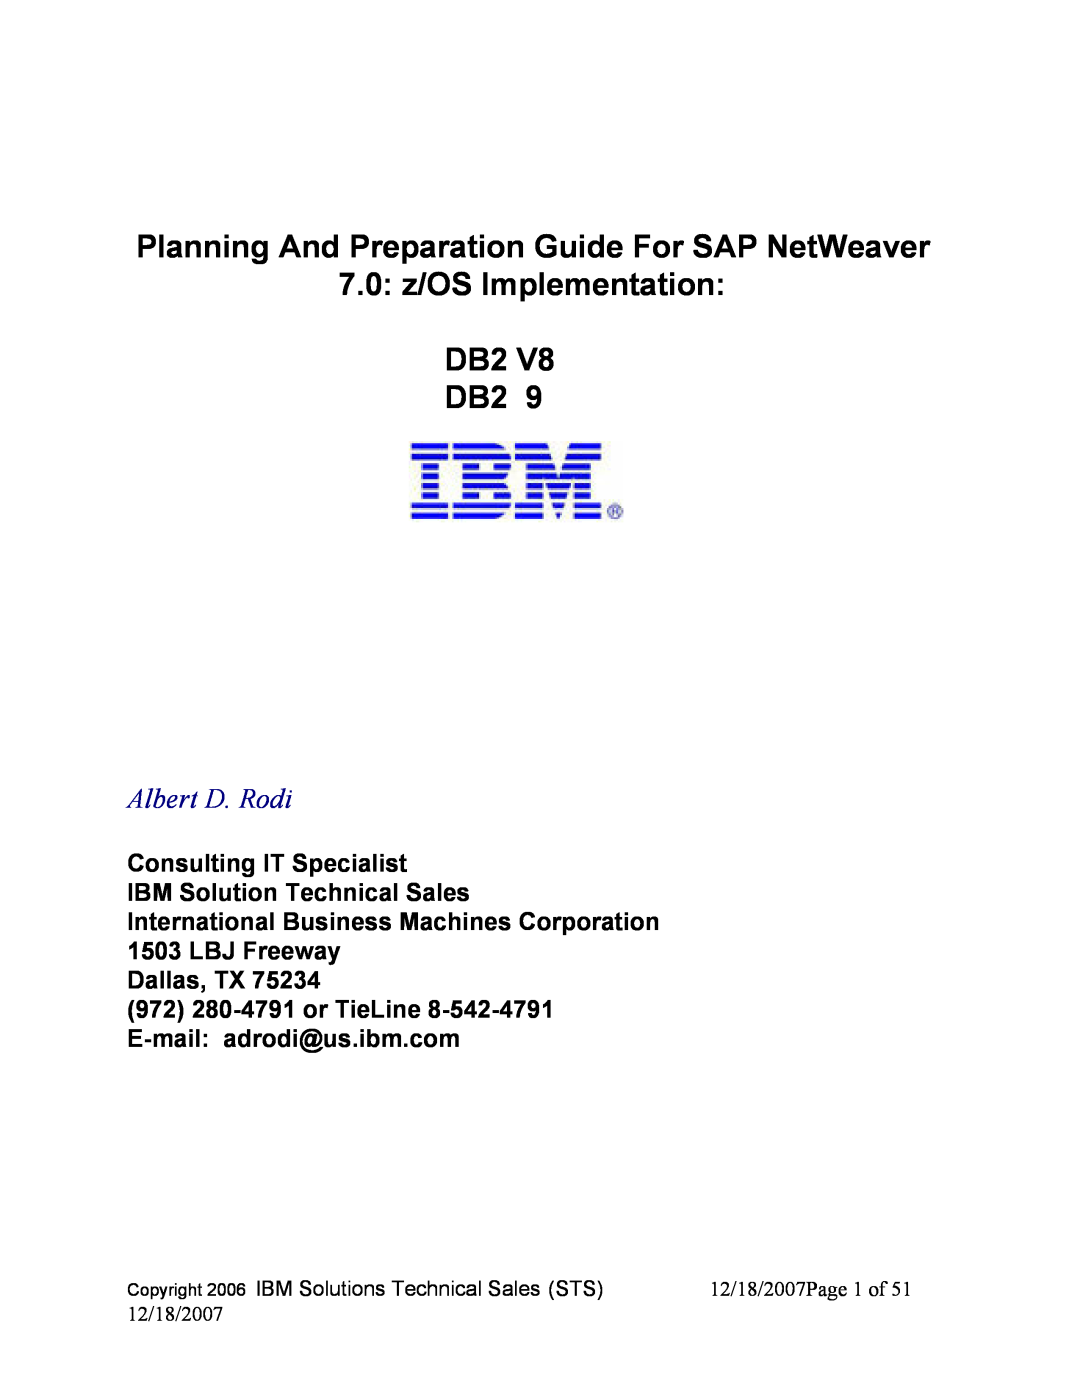 IBM DB2 V8, DB2 9 manual Planning And Preparation Guide For SAP NetWeaver, 7.0 z/OS Implementation DB2 DB2, Albert D. Rodi 